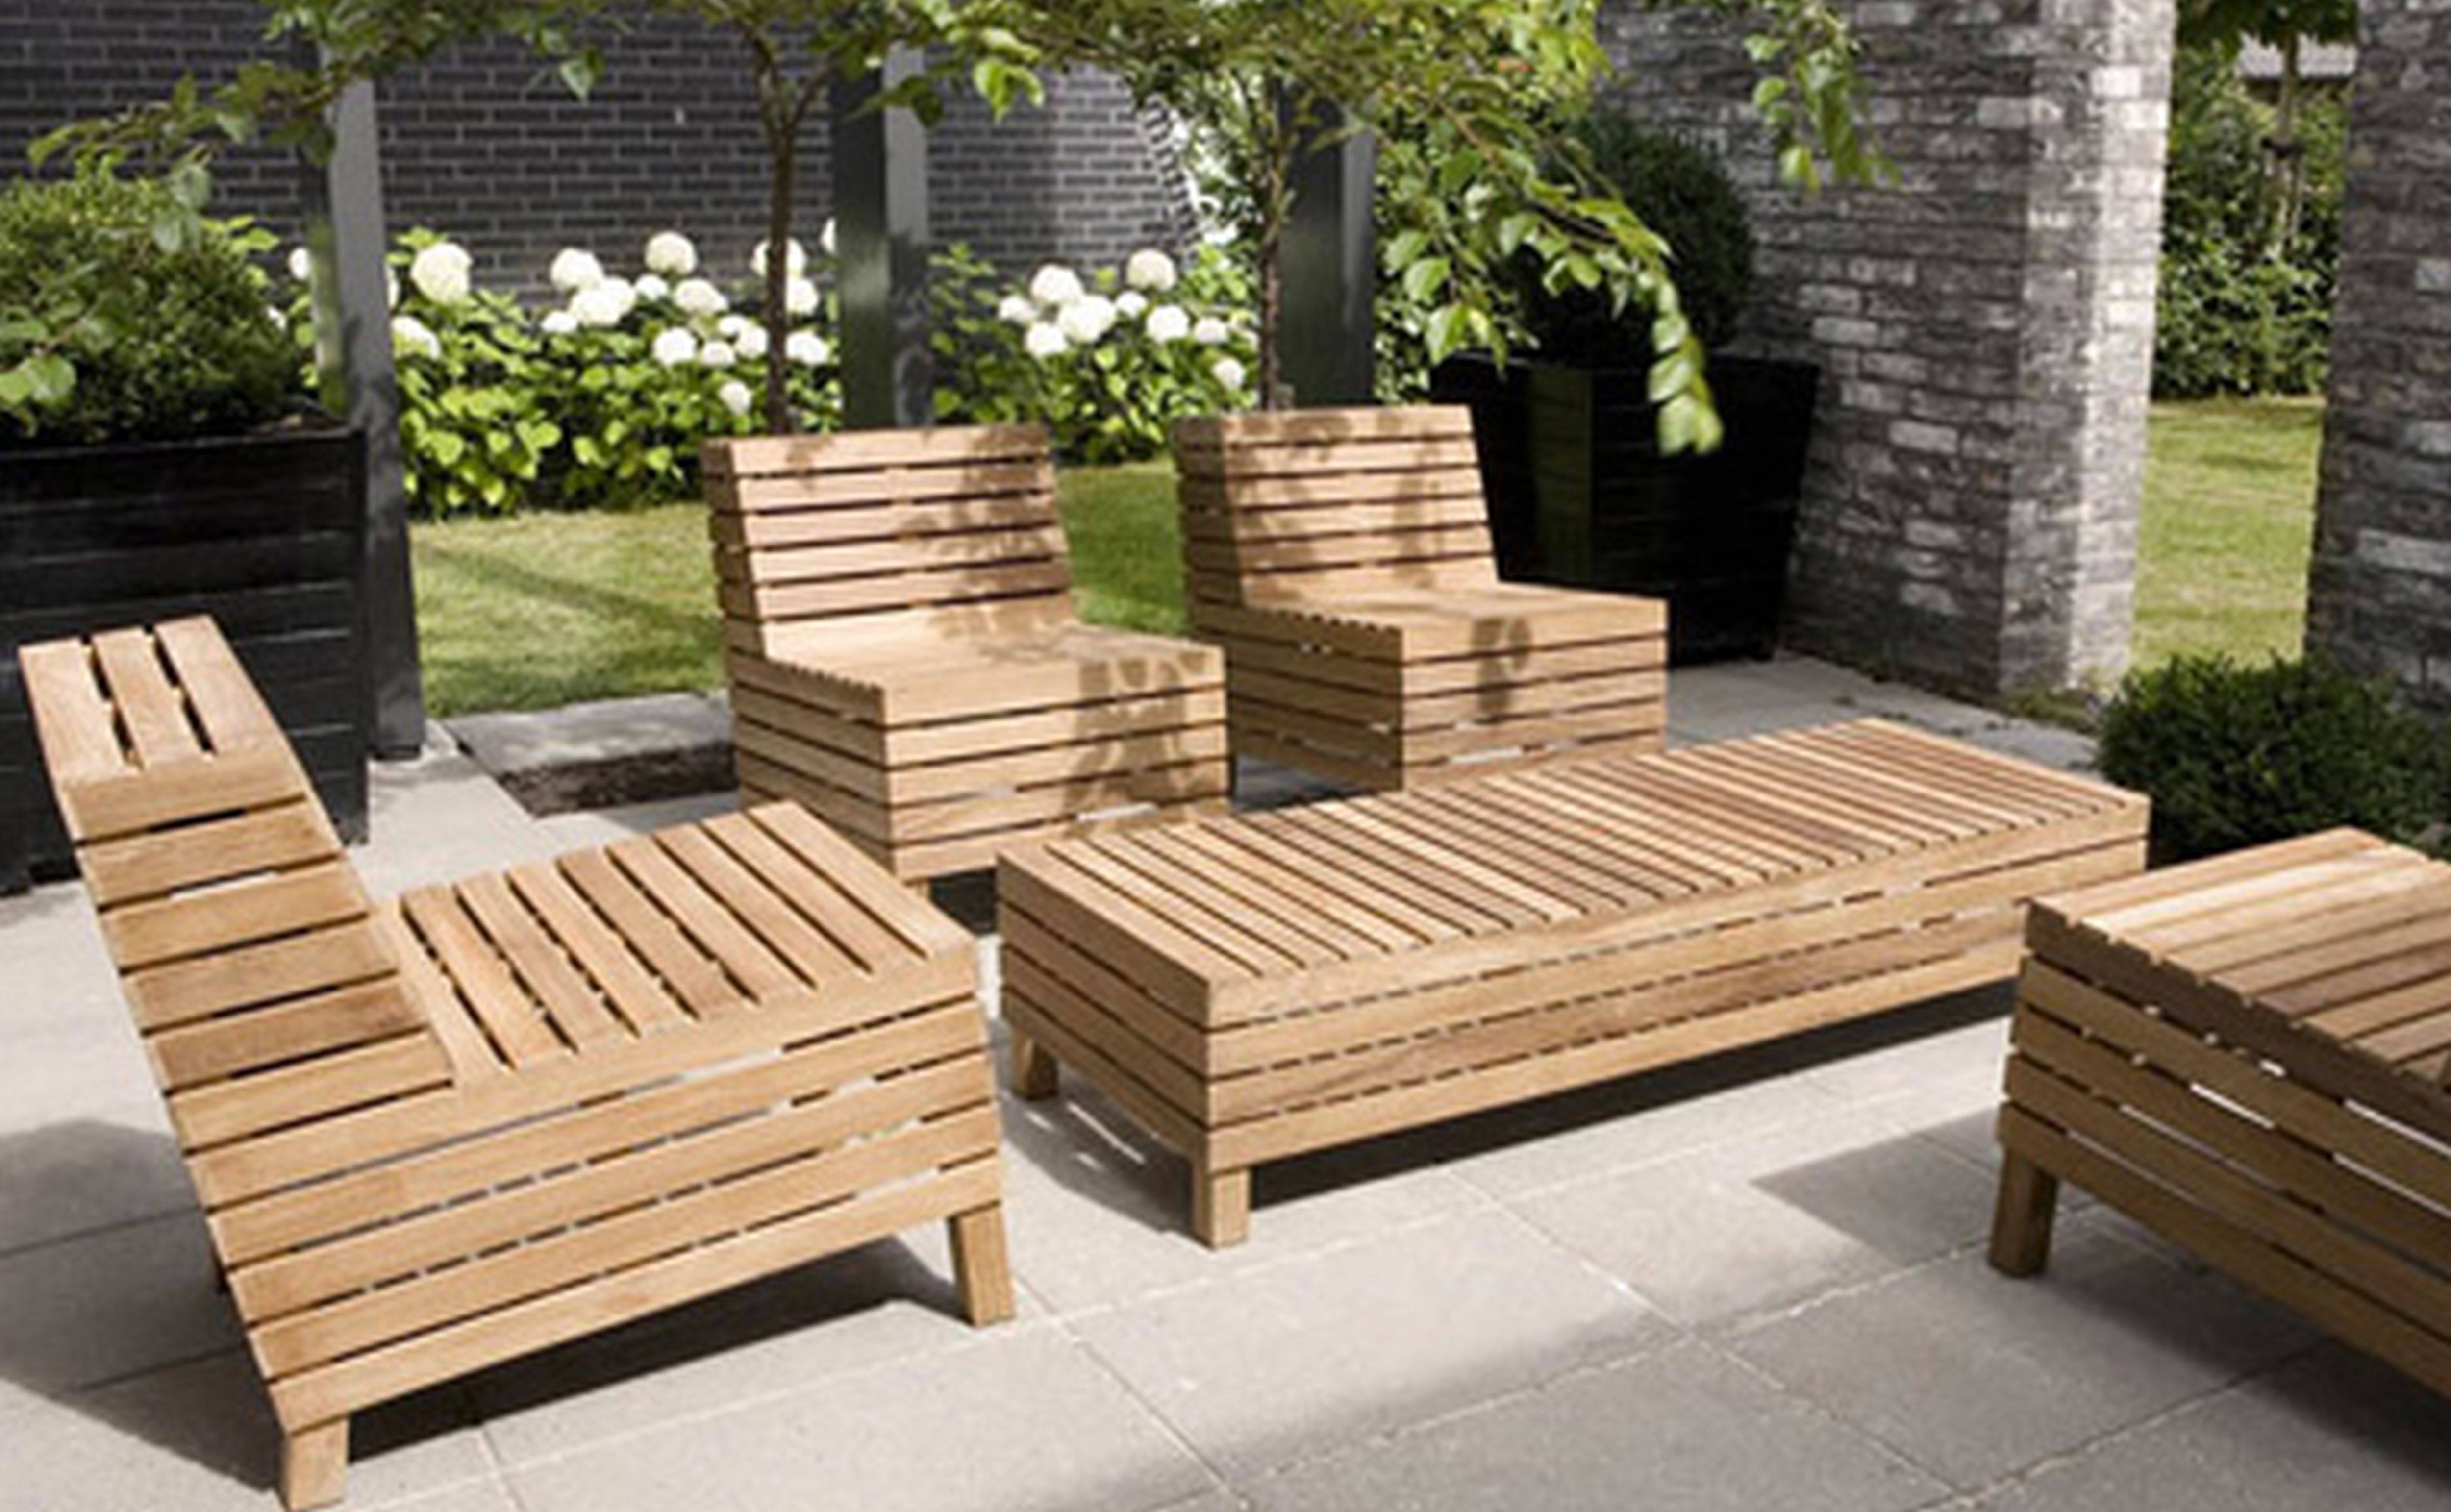 Pallet Wood Outdoor Lounge Furniture Pallet Ideas